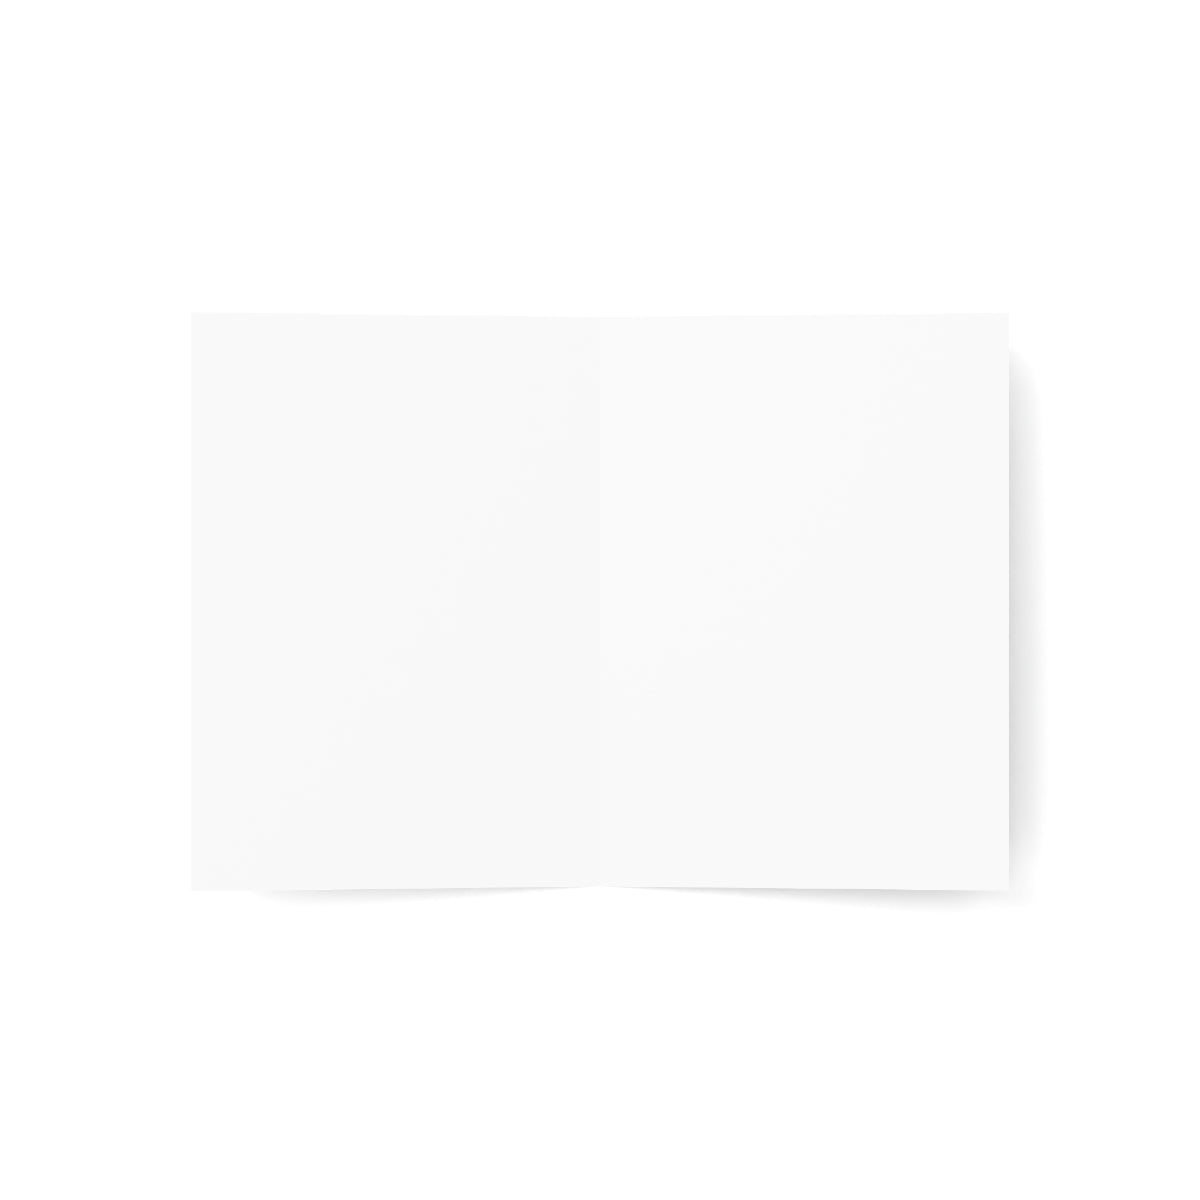 Cartes de notes mates pliées Santa Barbara + enveloppes (10 pièces) 